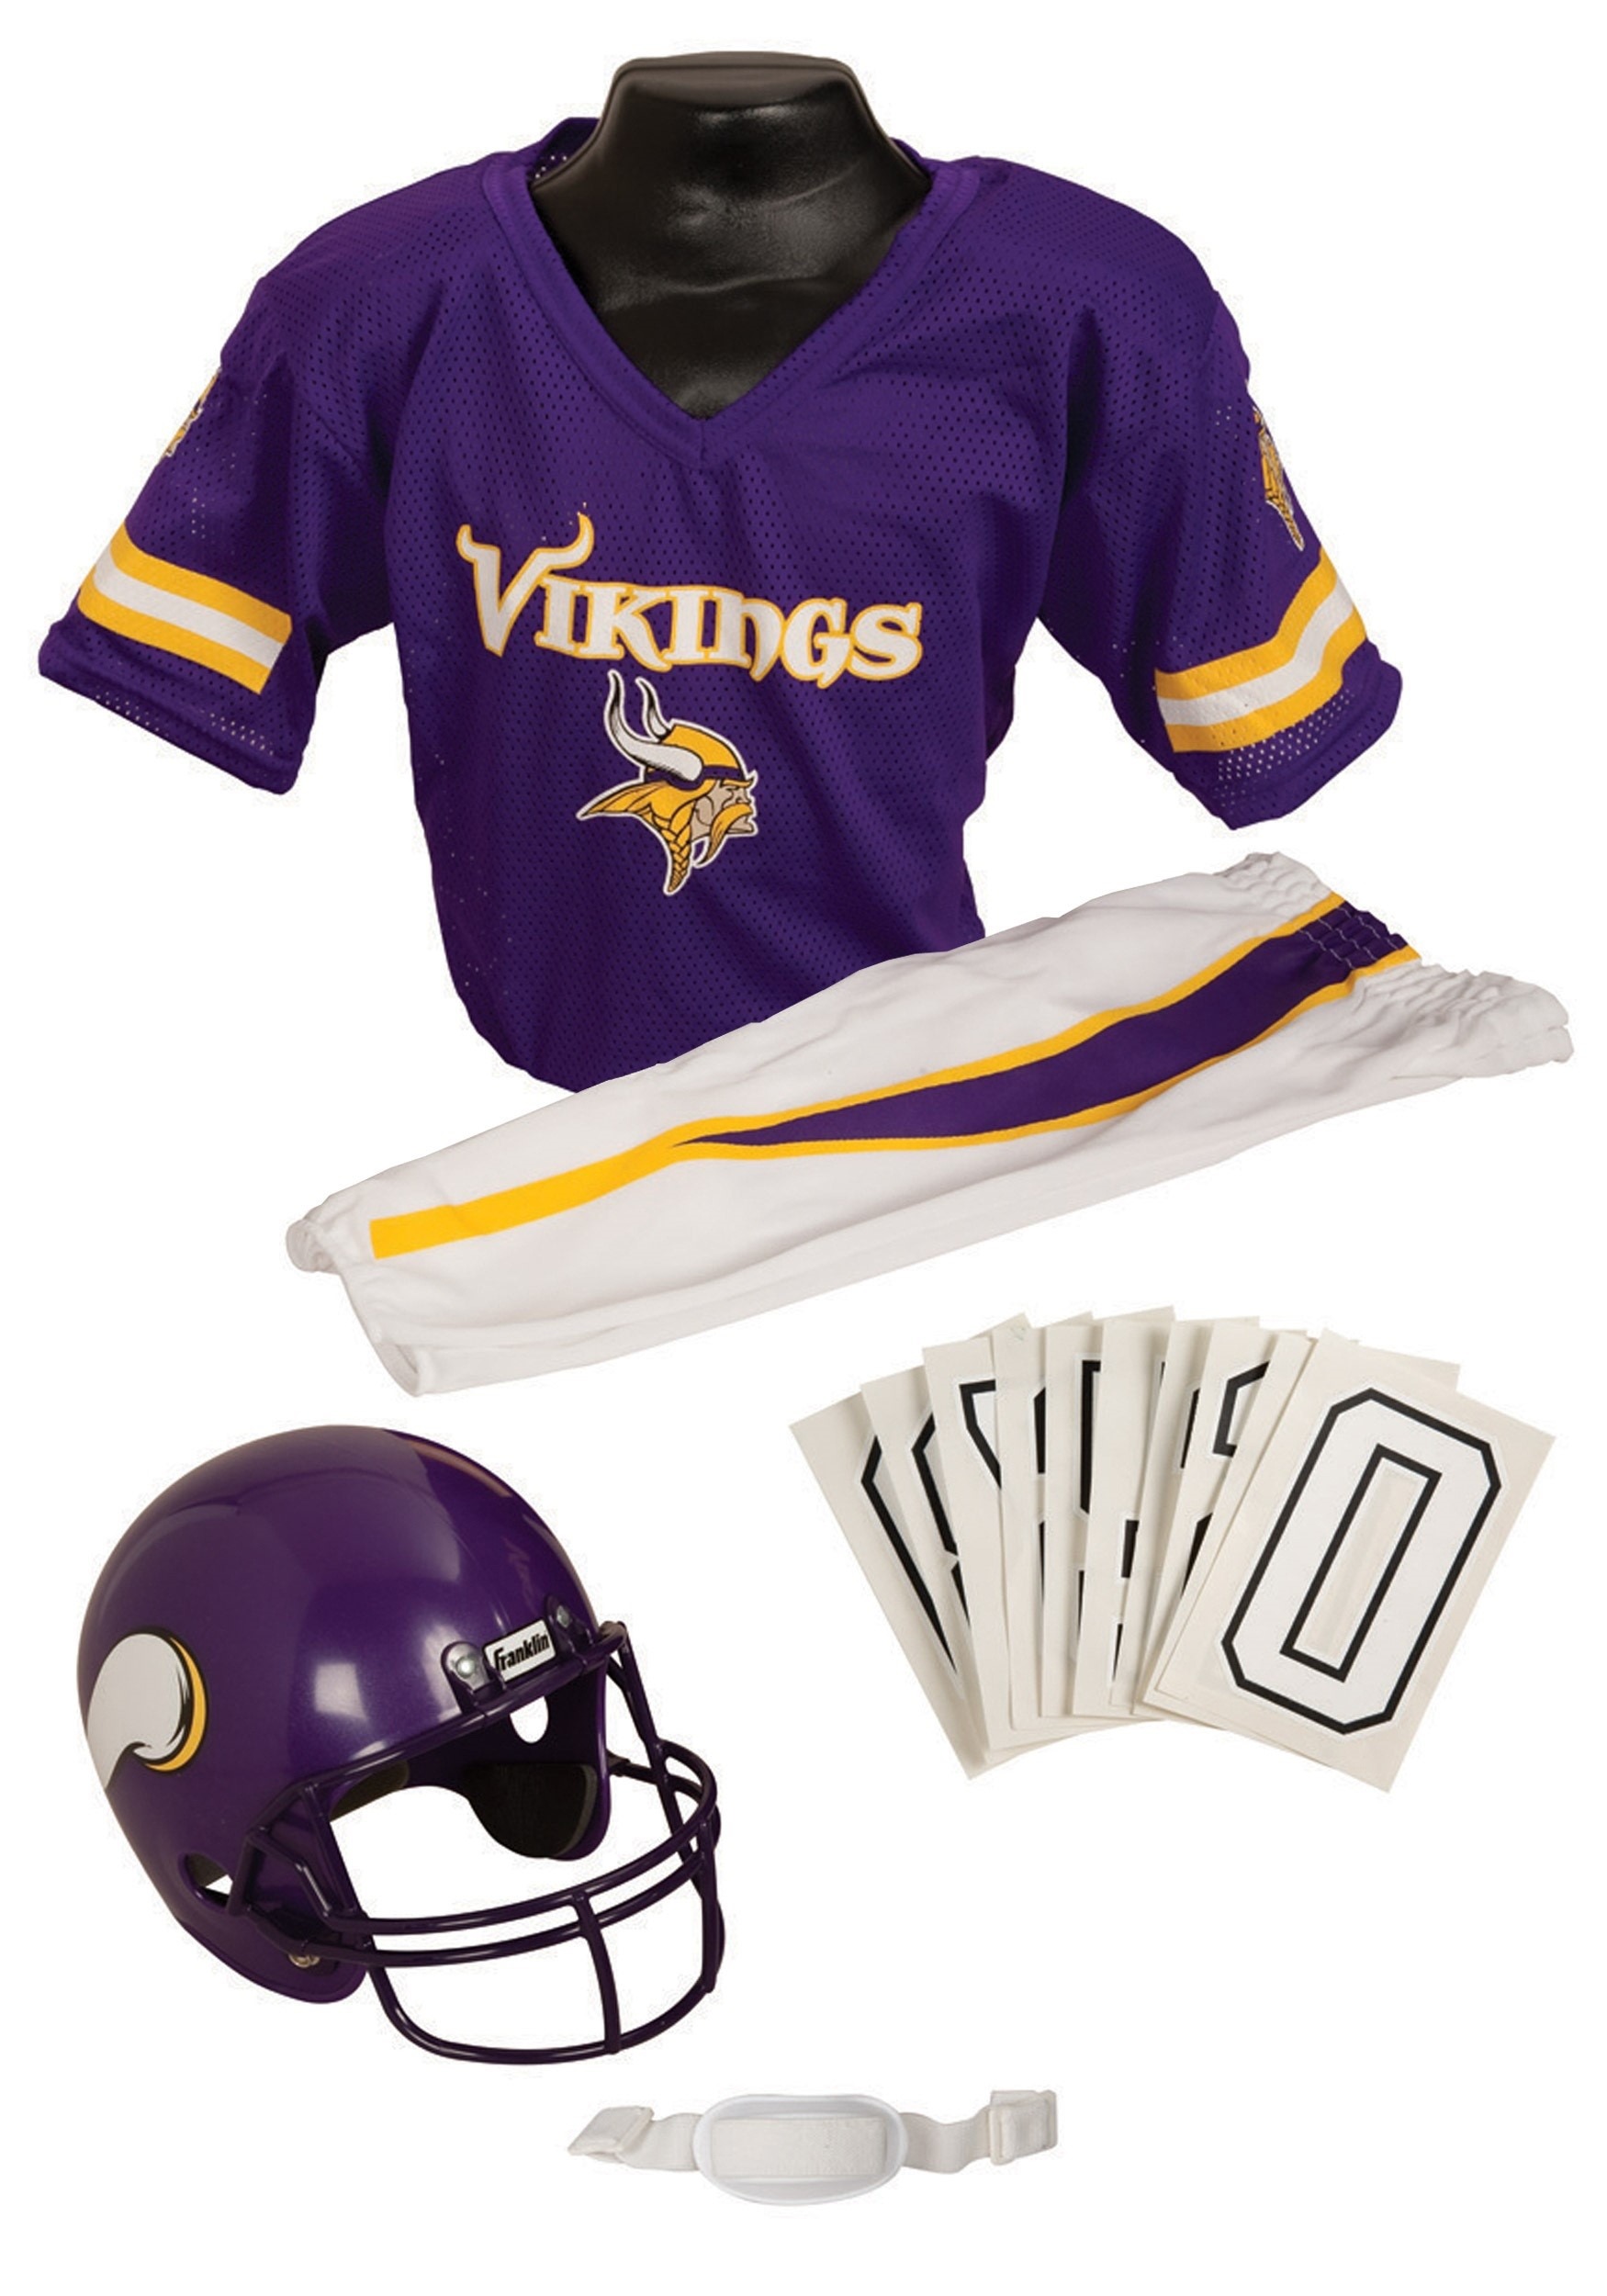 Kids Vikings NFL Uniform Set